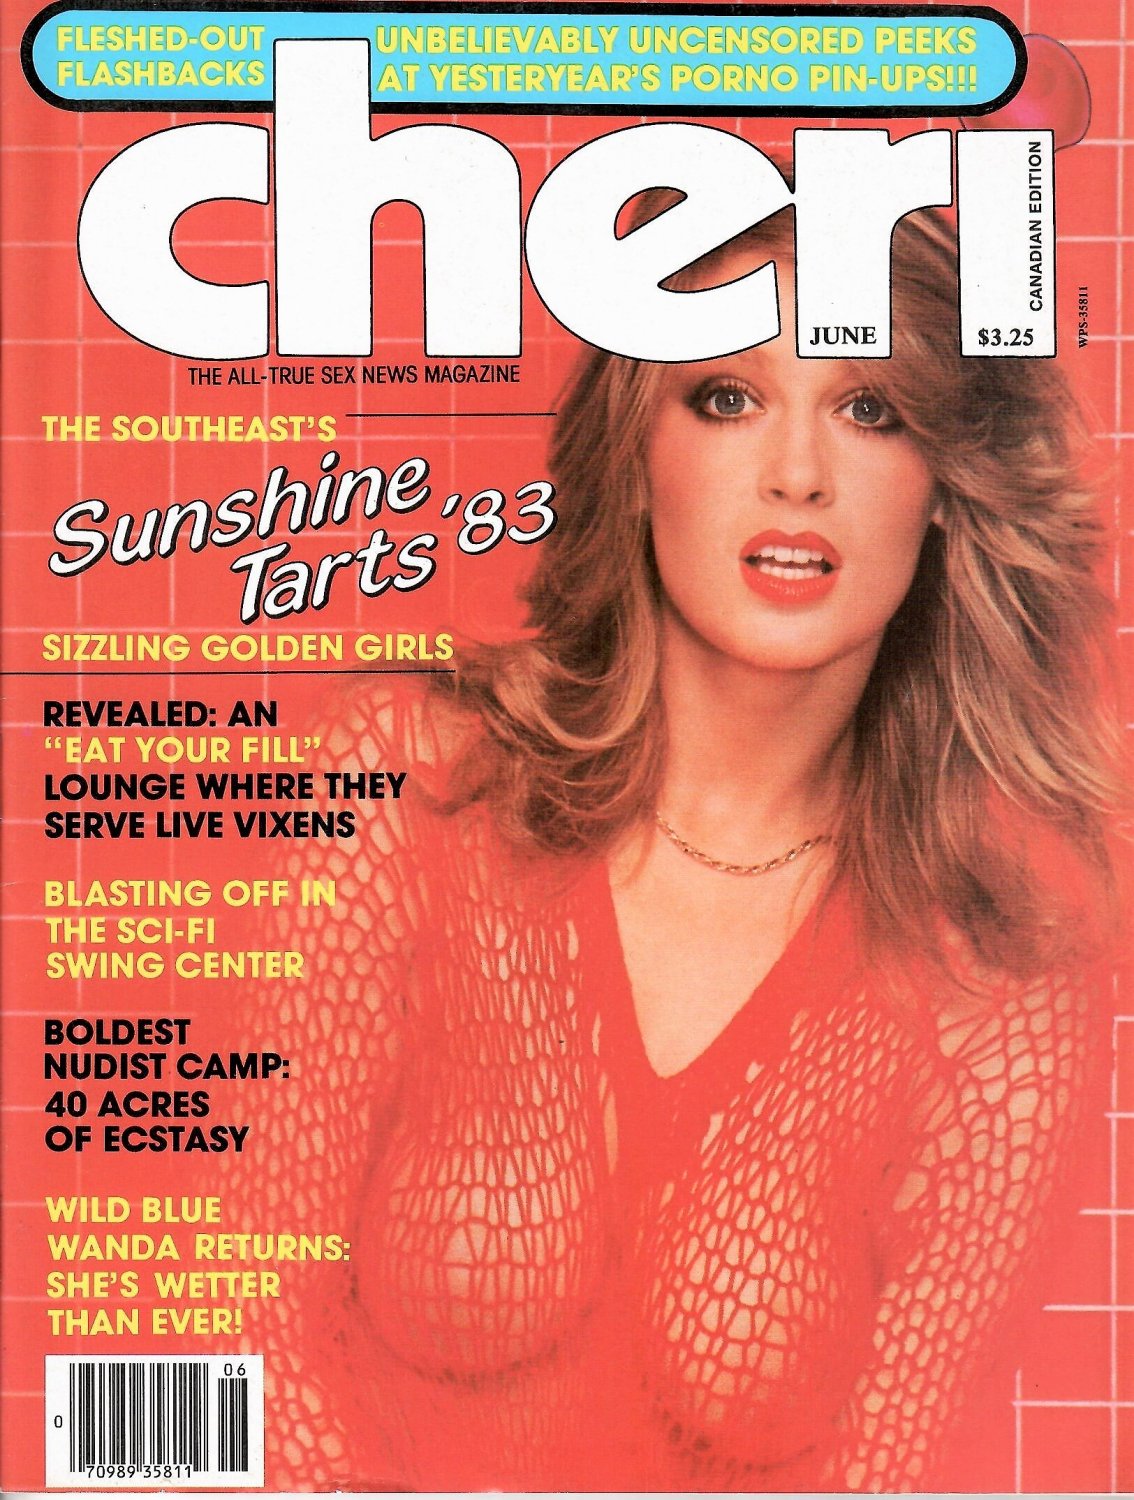 CHERI MAGAZINE June 1983 THE SOUTHEAST'S SUNSHINE TARTS '83 Boldest Nudist Camp